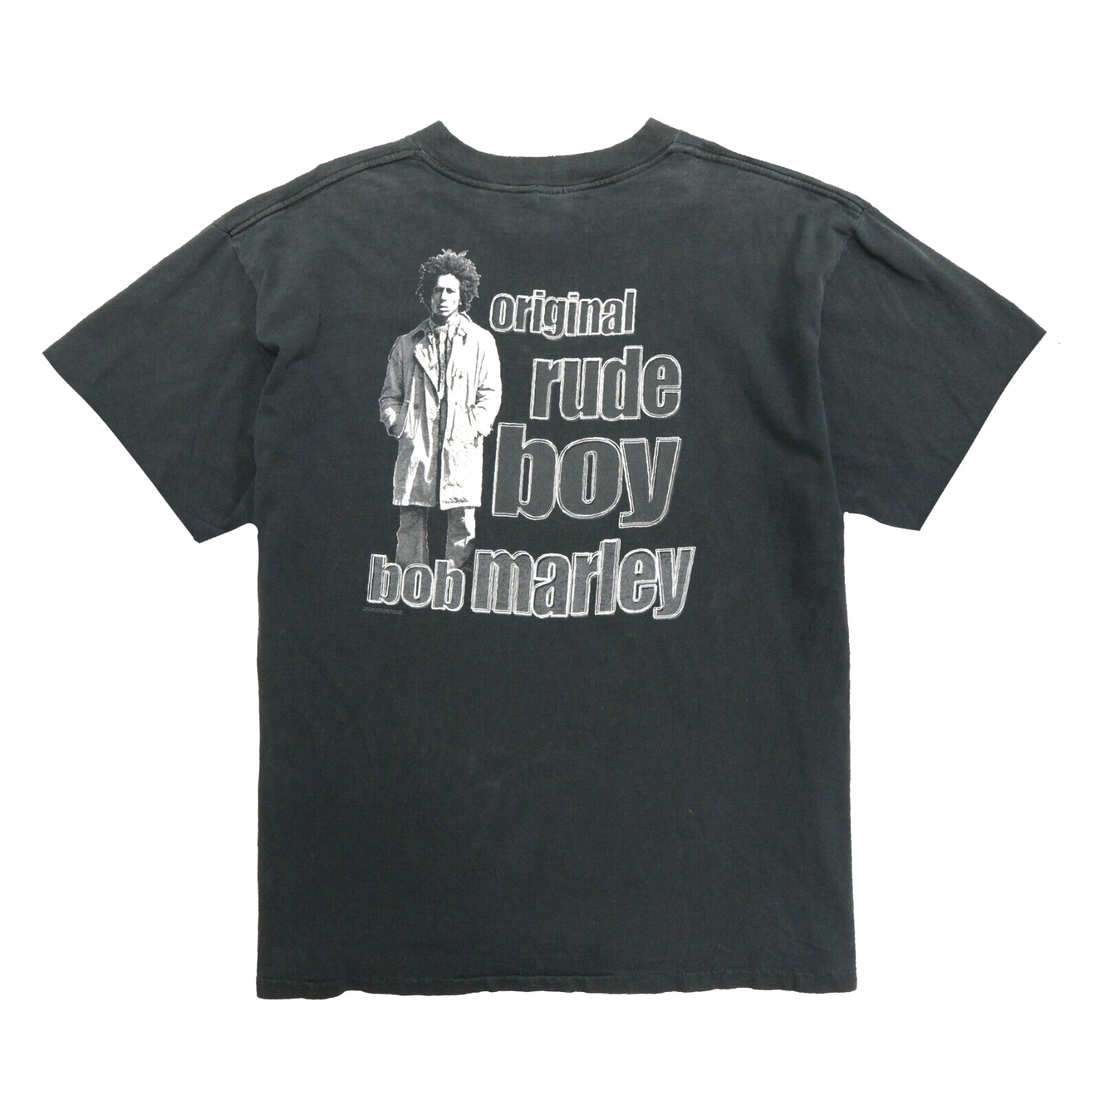 Vintage Bob Marley Original Rude Boy T-Shirt Size XL Black Made USA Reggae 90s